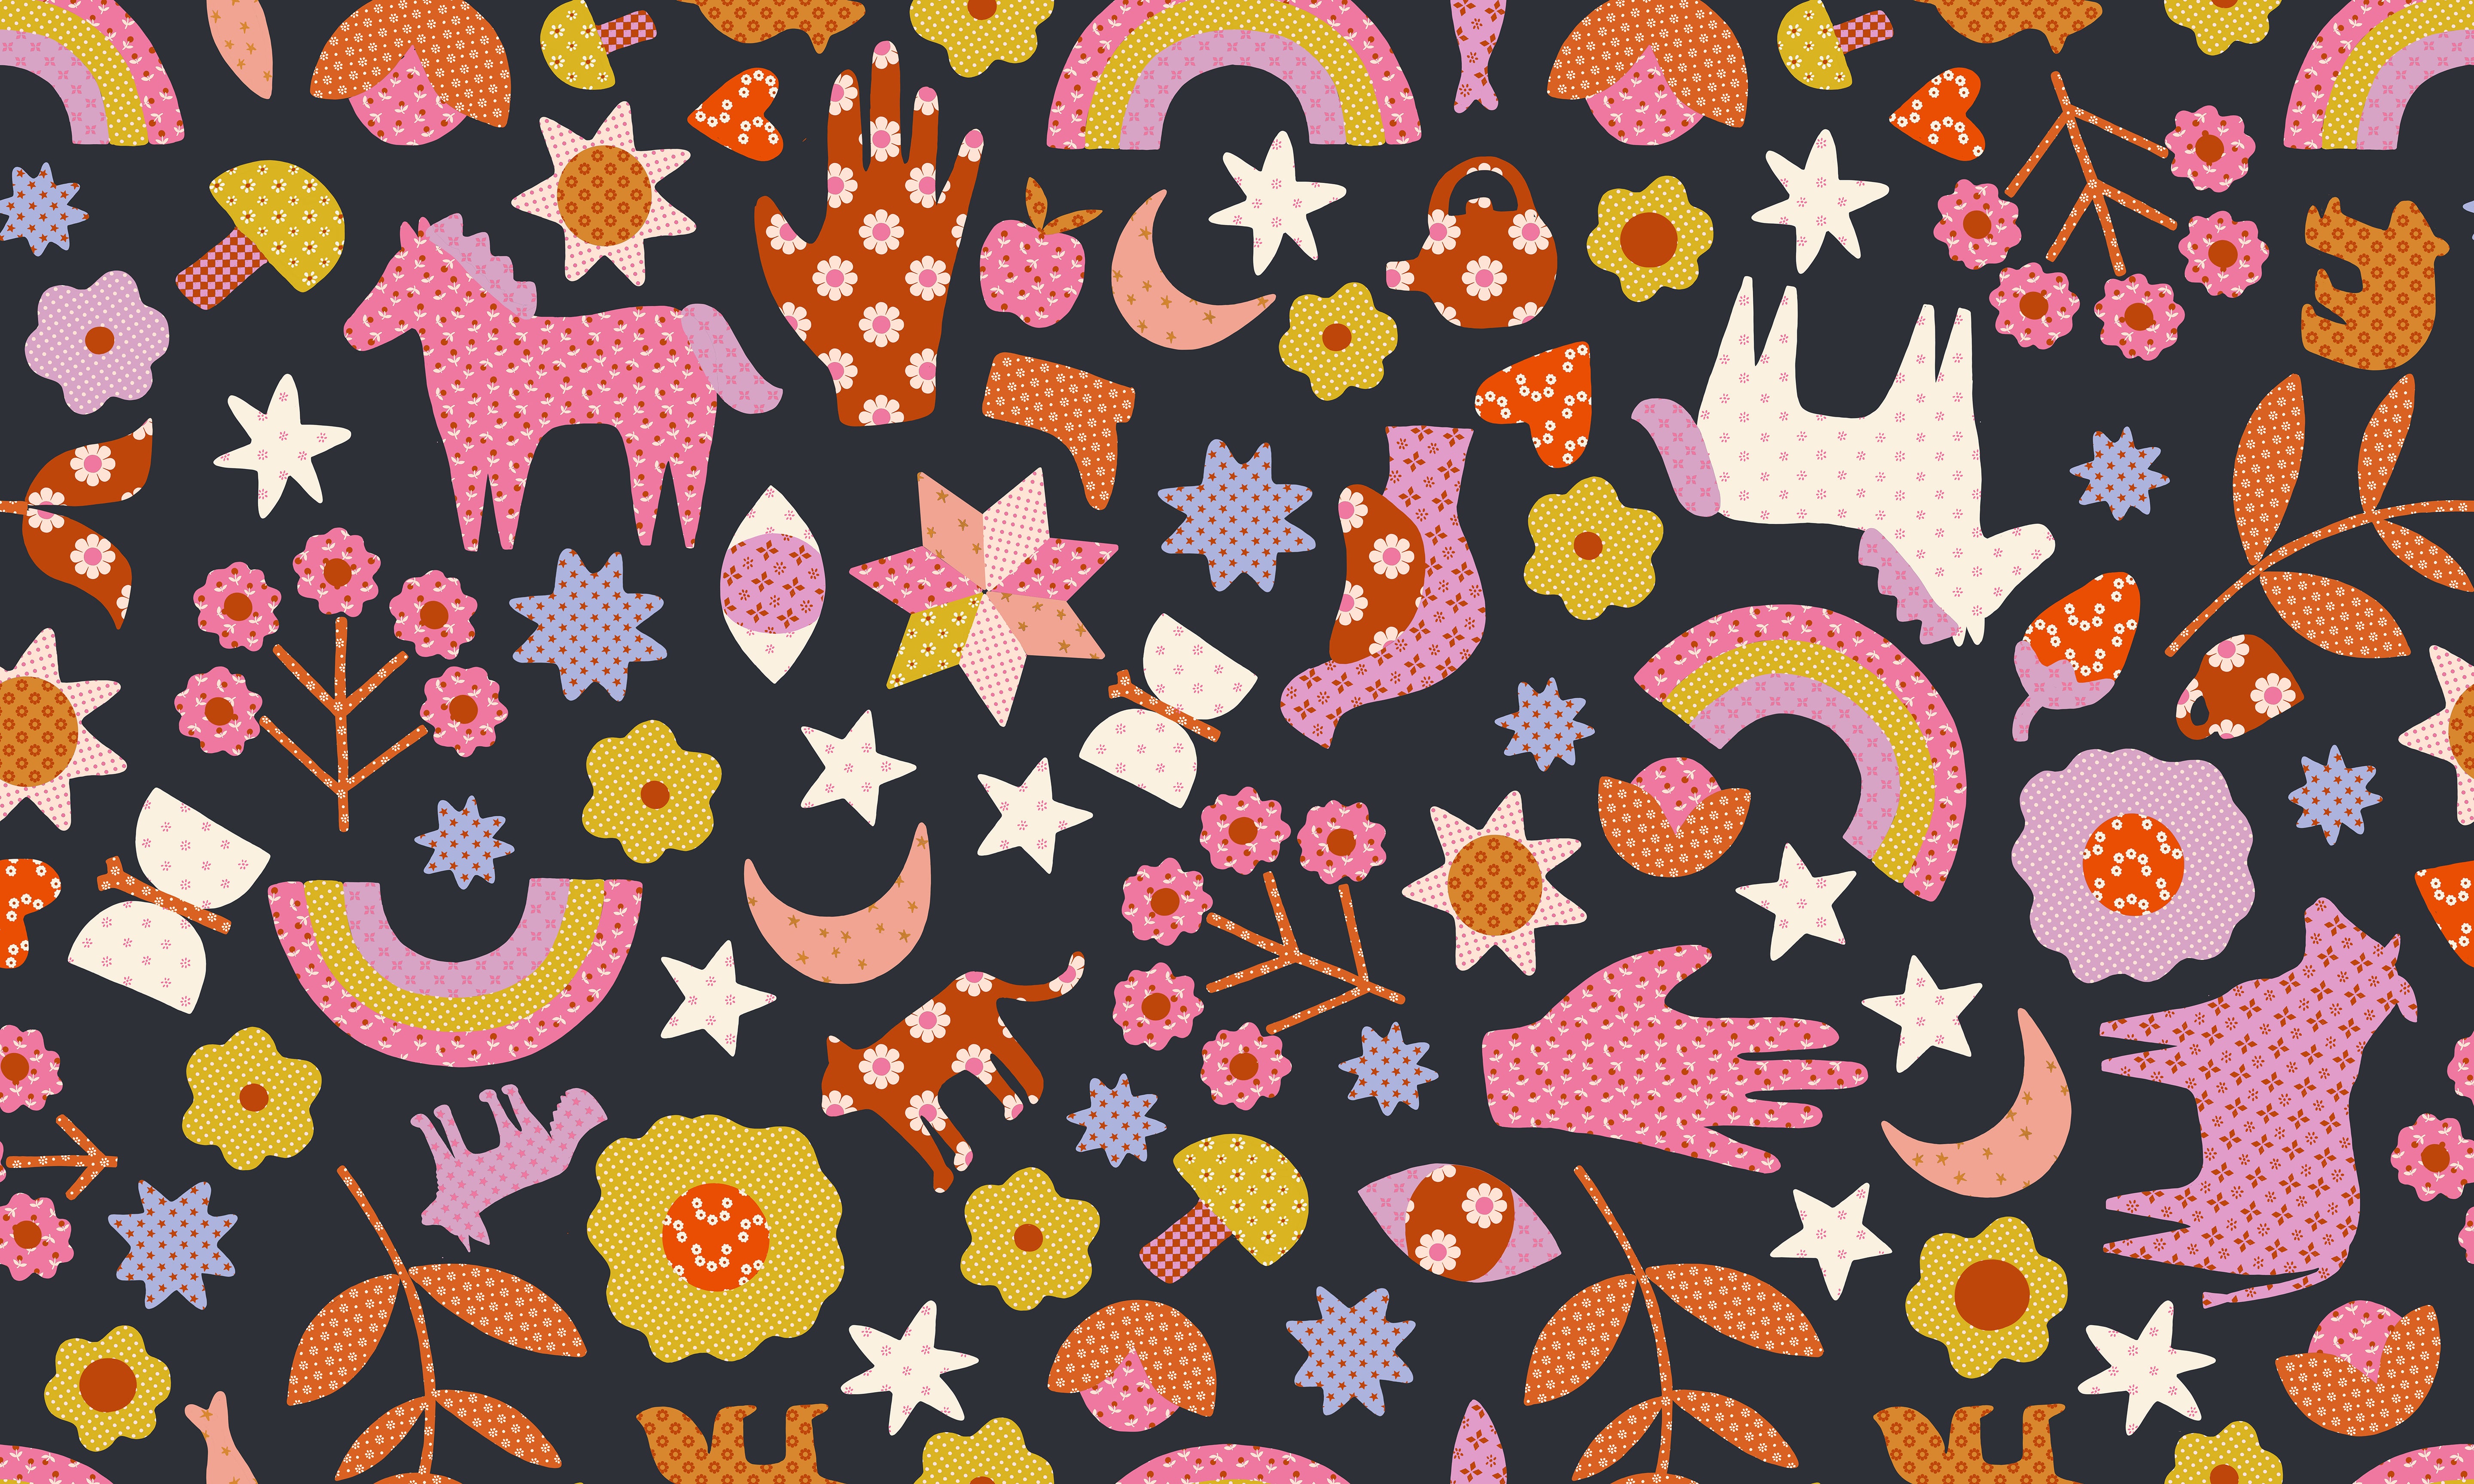 Meadow Star- Soft Black from Meadow Star by Alexia Abegg for Moda Fabrics